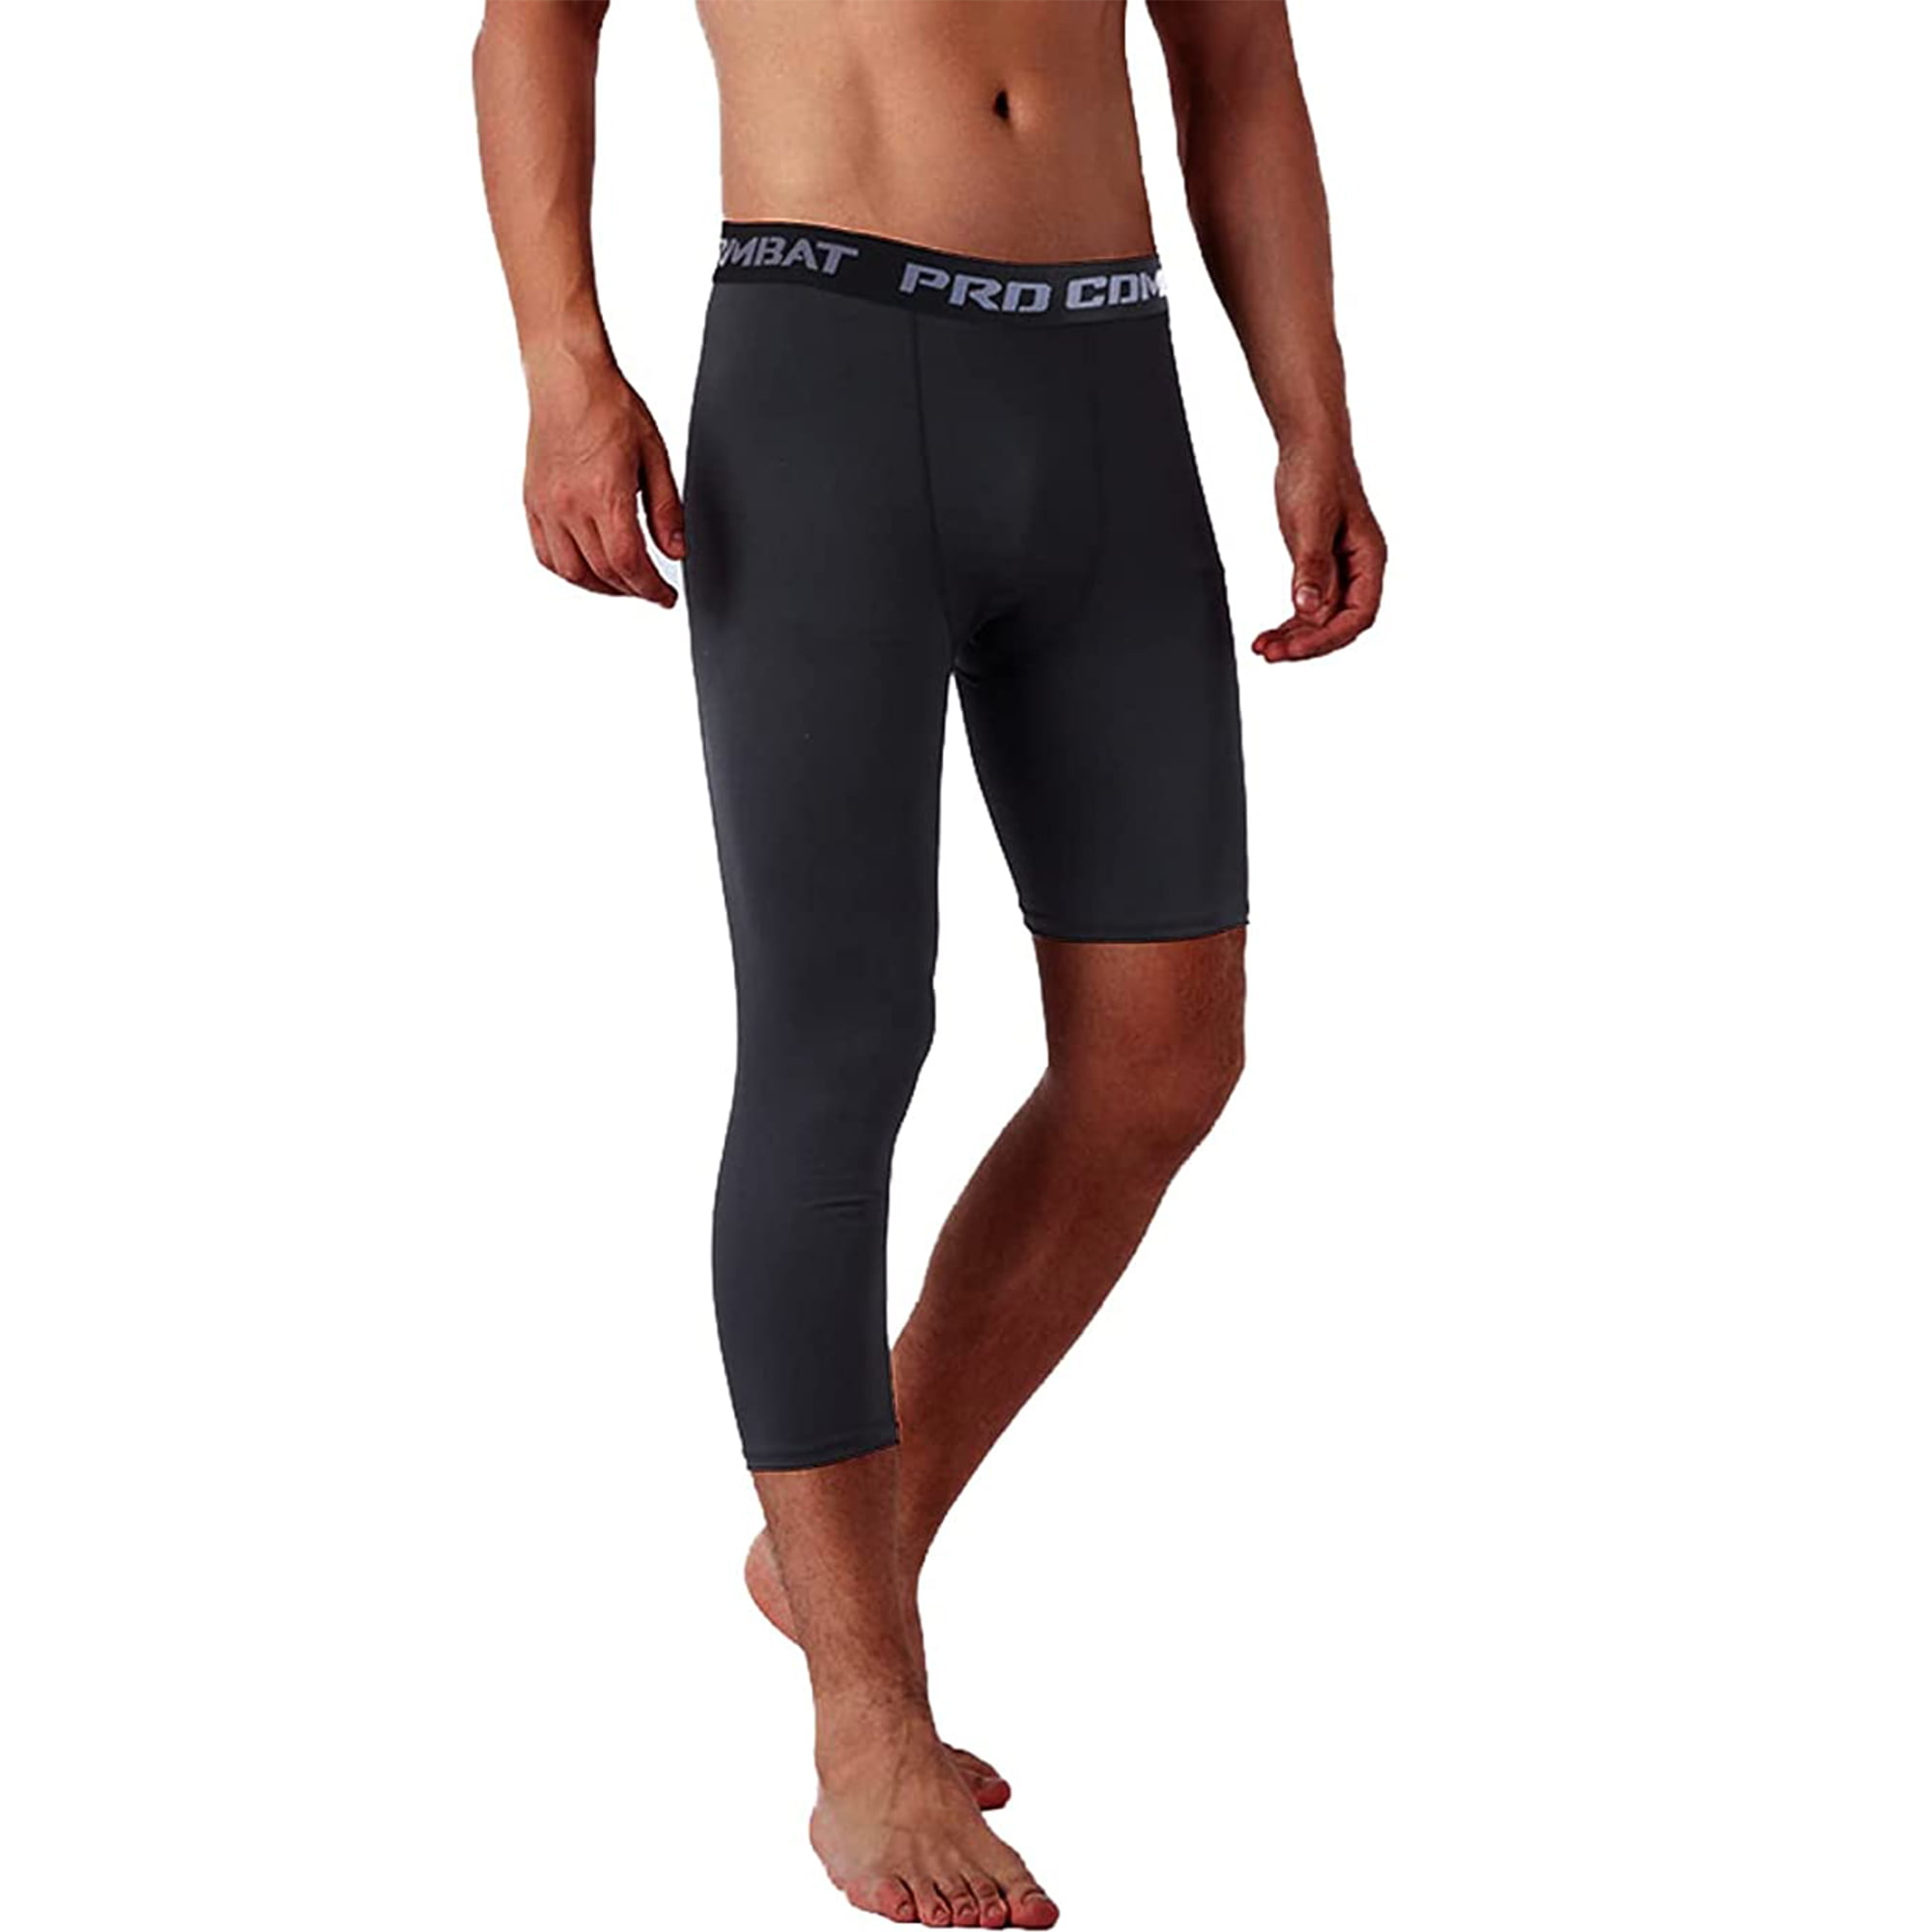 Klooyo Men's One Leg Compression Capri Tights Base Pants Layer Athletic Basketball J8j8 Other Xl